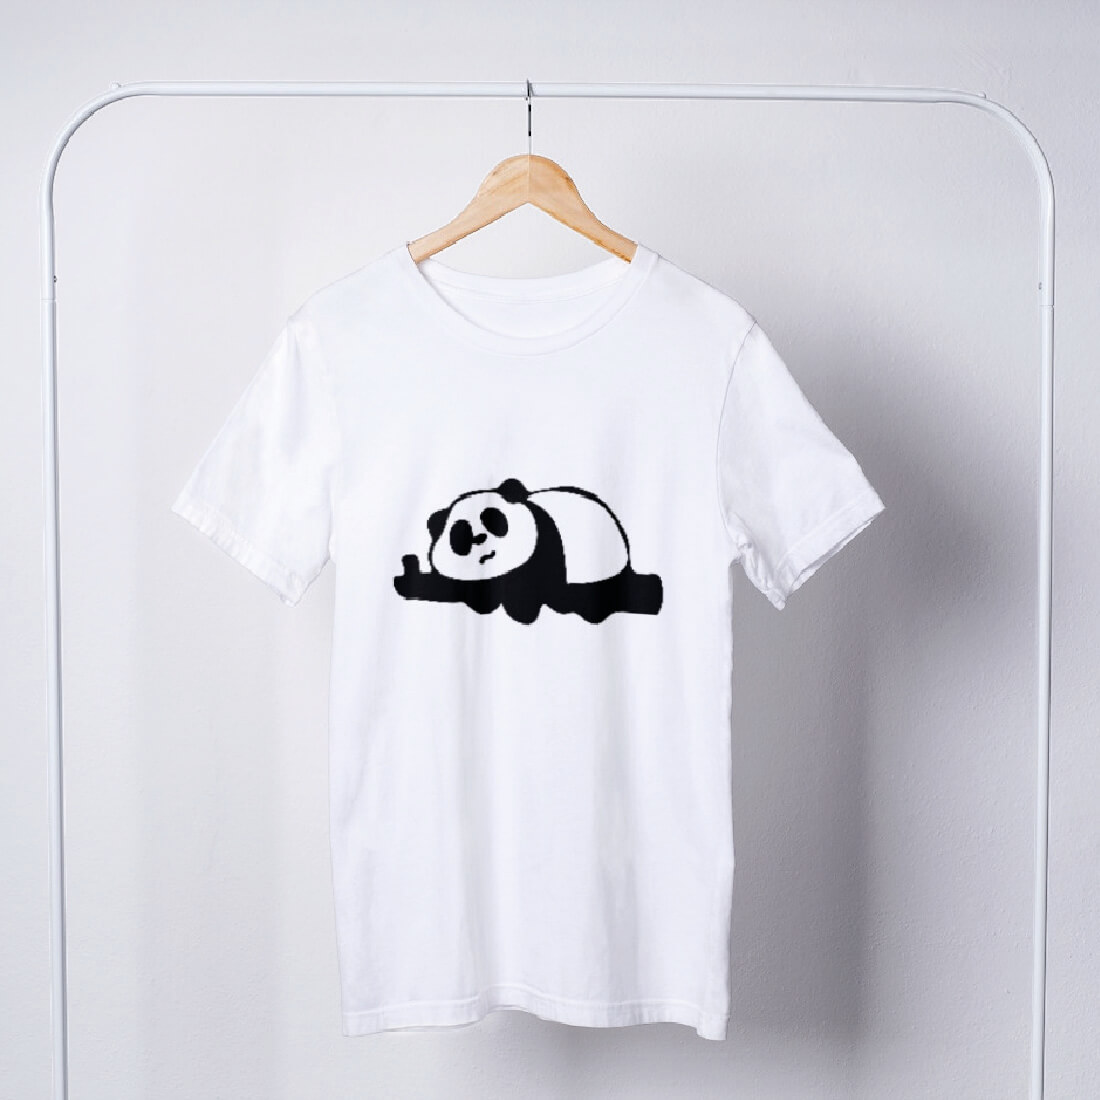 T-shirt Panda Black Design Graphics preview image.